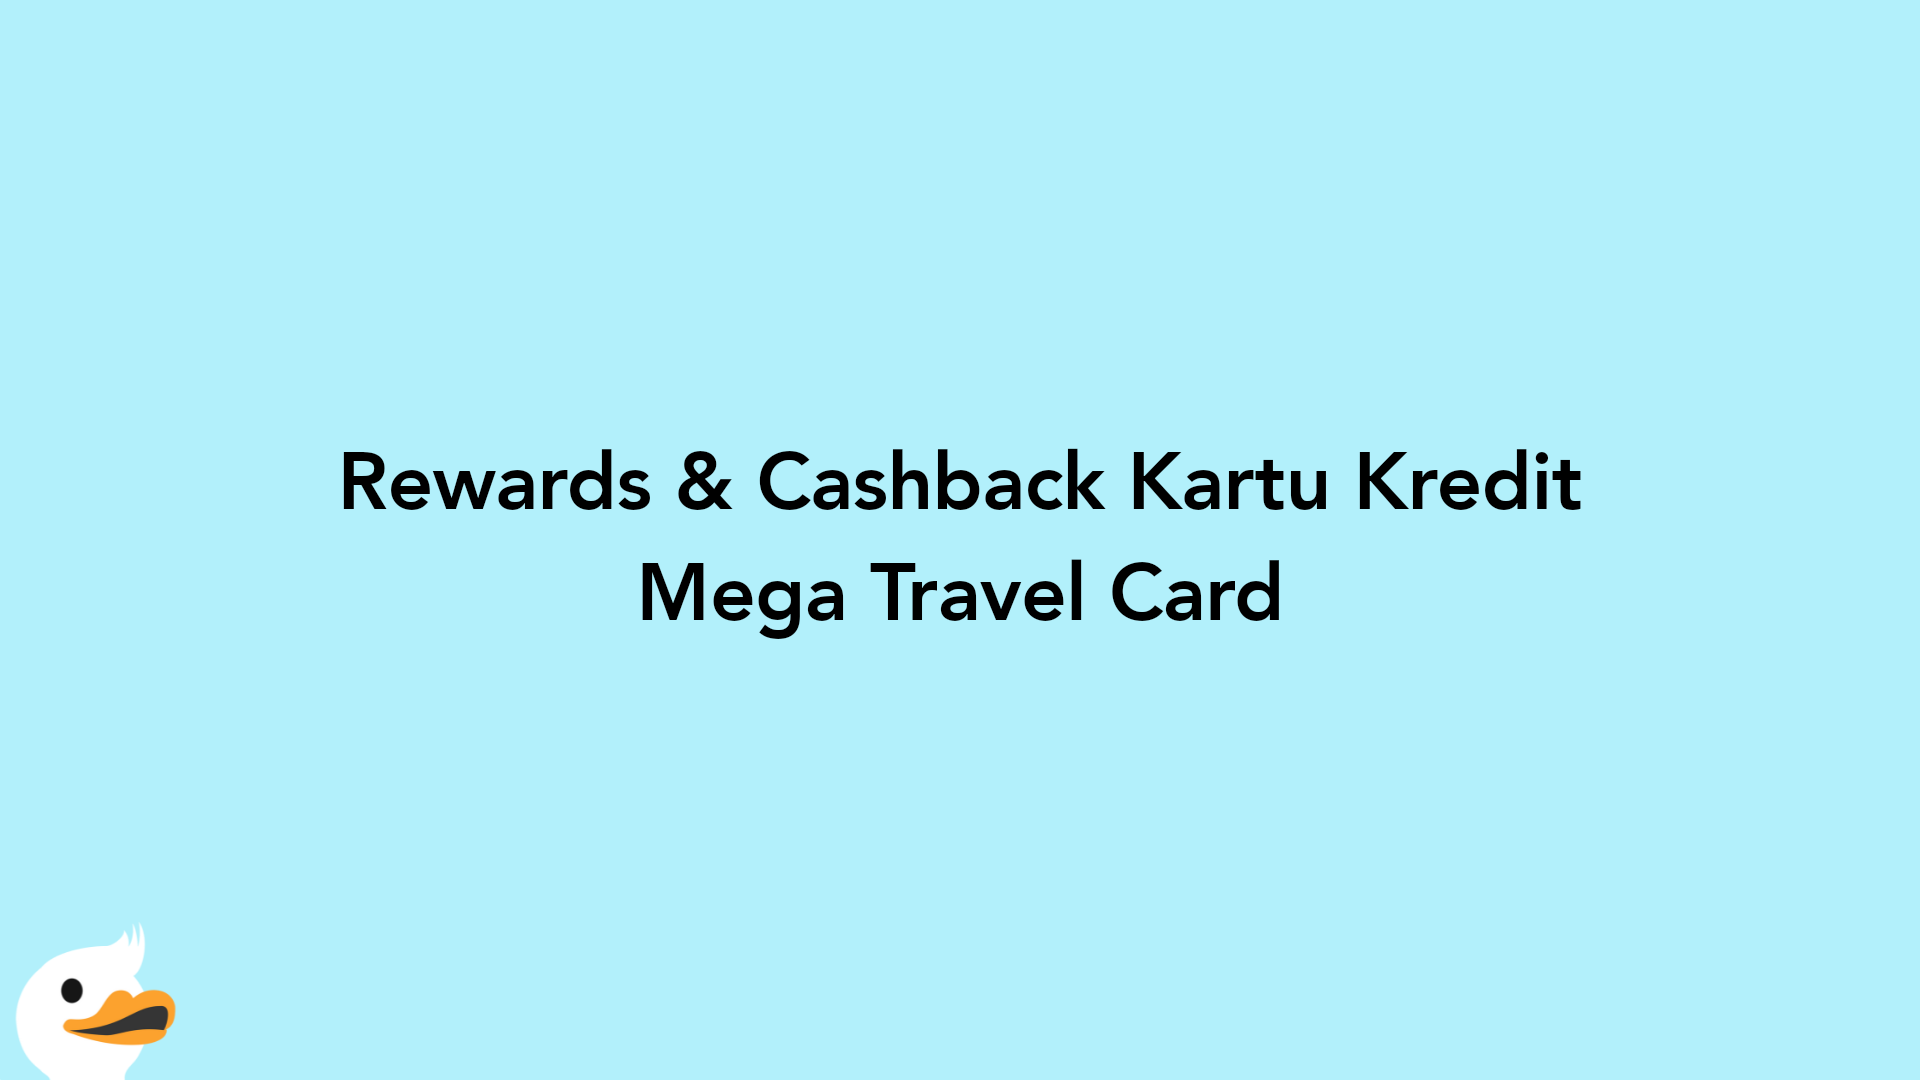 Rewards & Cashback Kartu Kredit Mega Travel Card